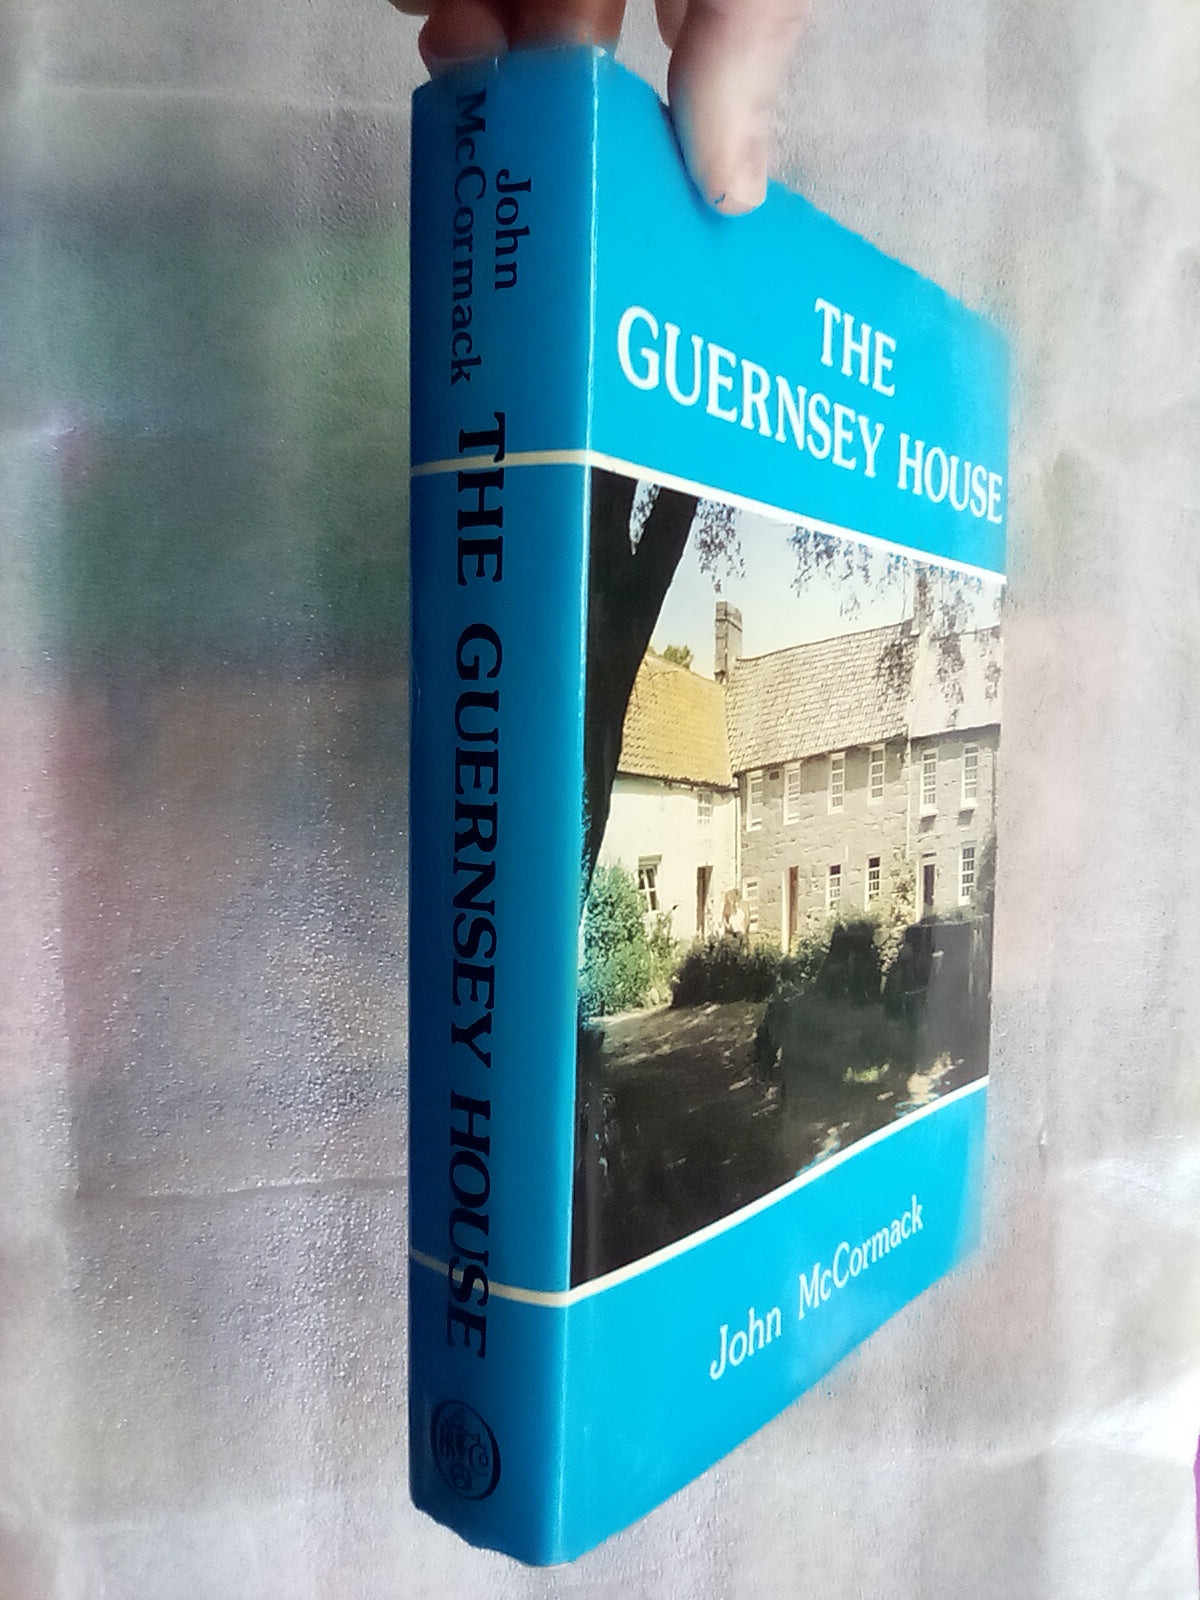 The Guernsey House by John McCormack